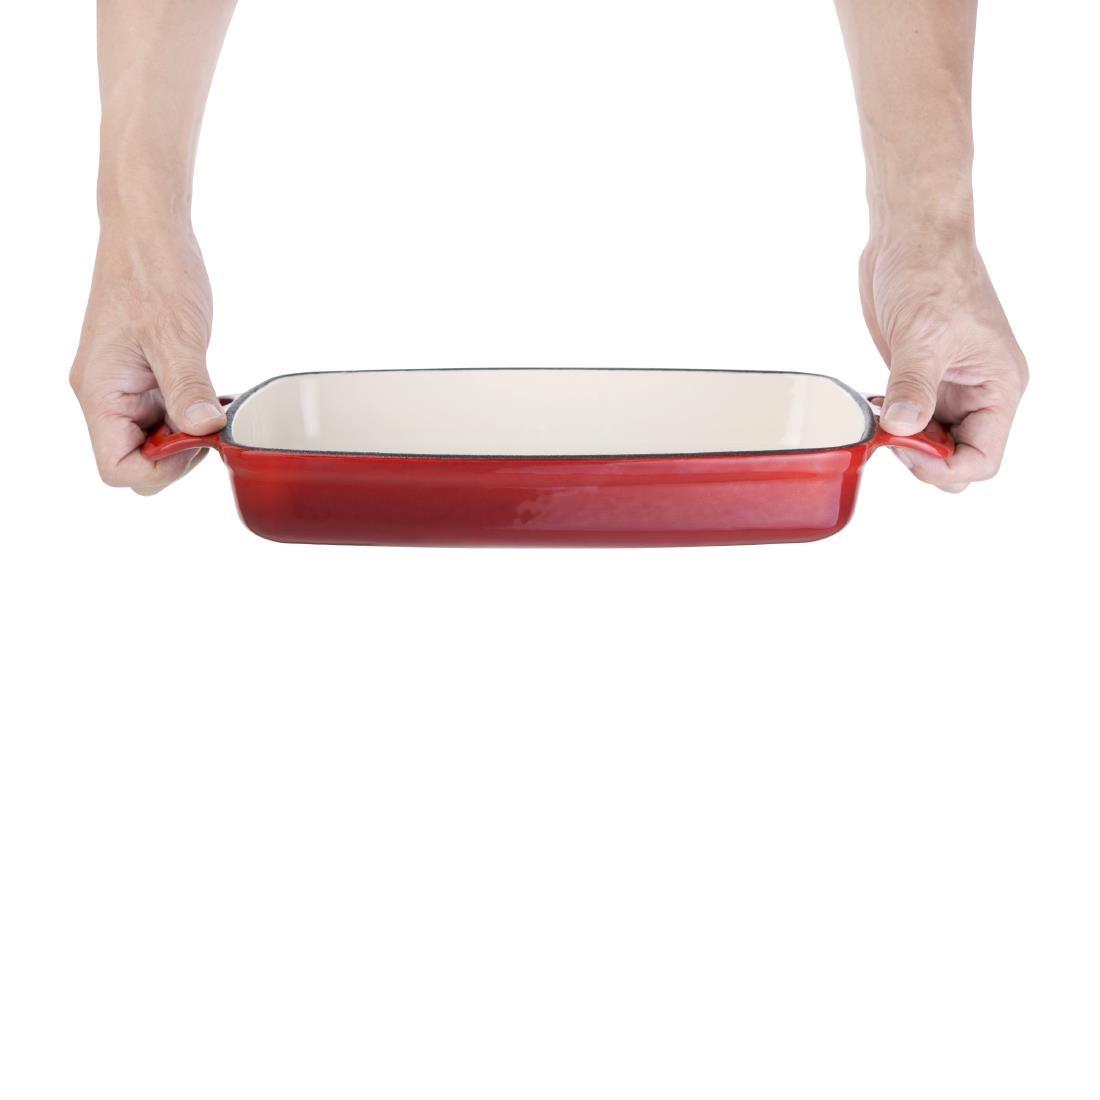 Vogue Red Cast Iron Casserole Dish 1.8Ltr - GH319  - 5